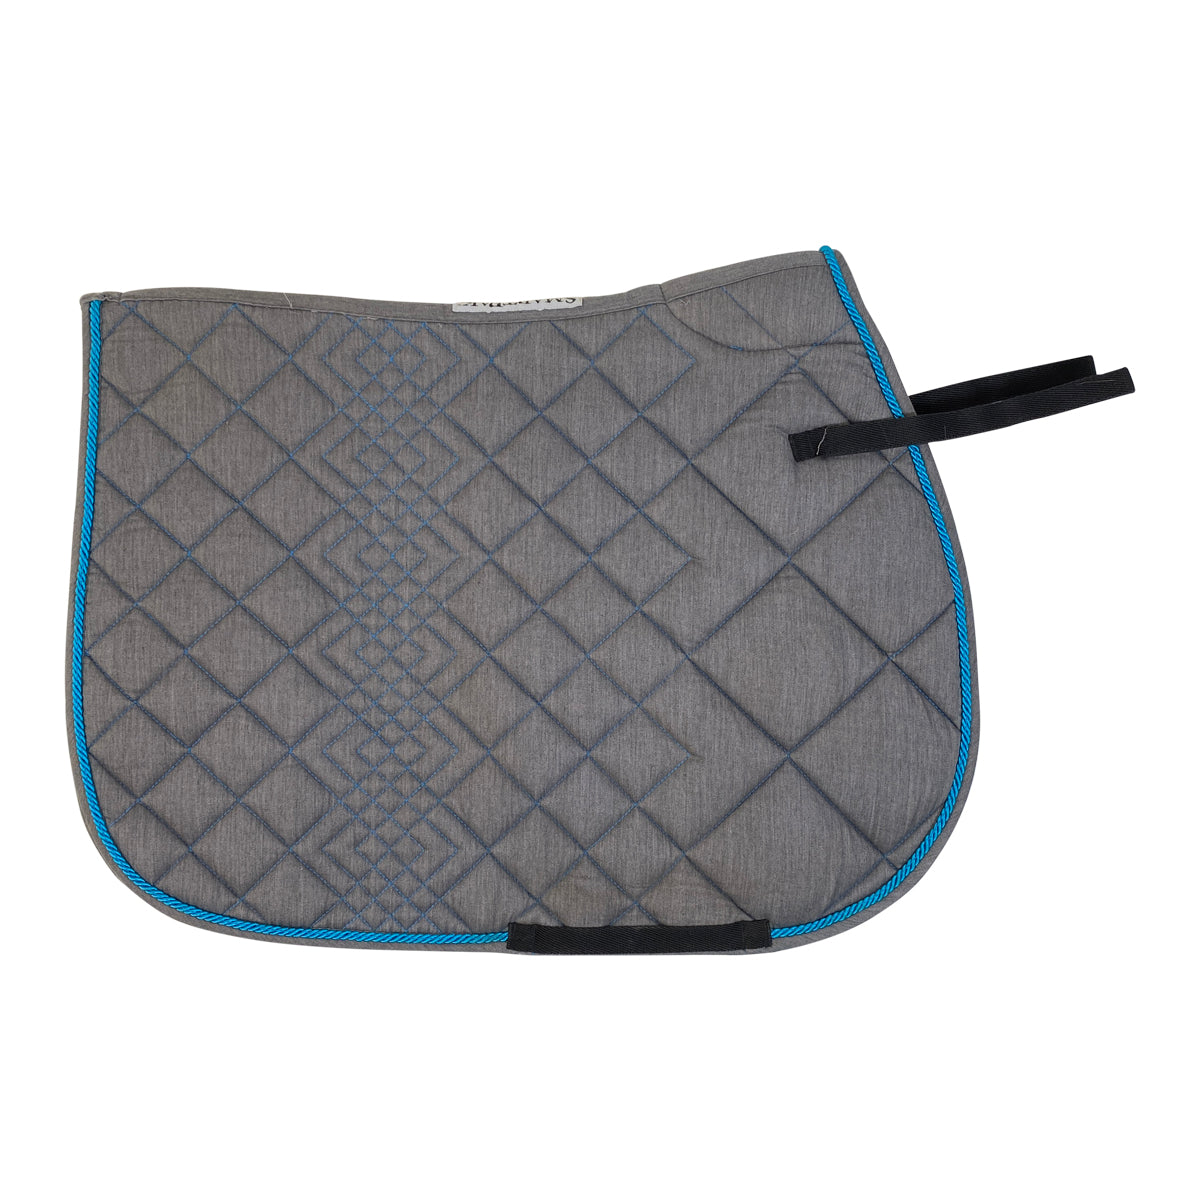 SmartPak Deluxe Diamond AP Saddle Pad in Grey/Blue